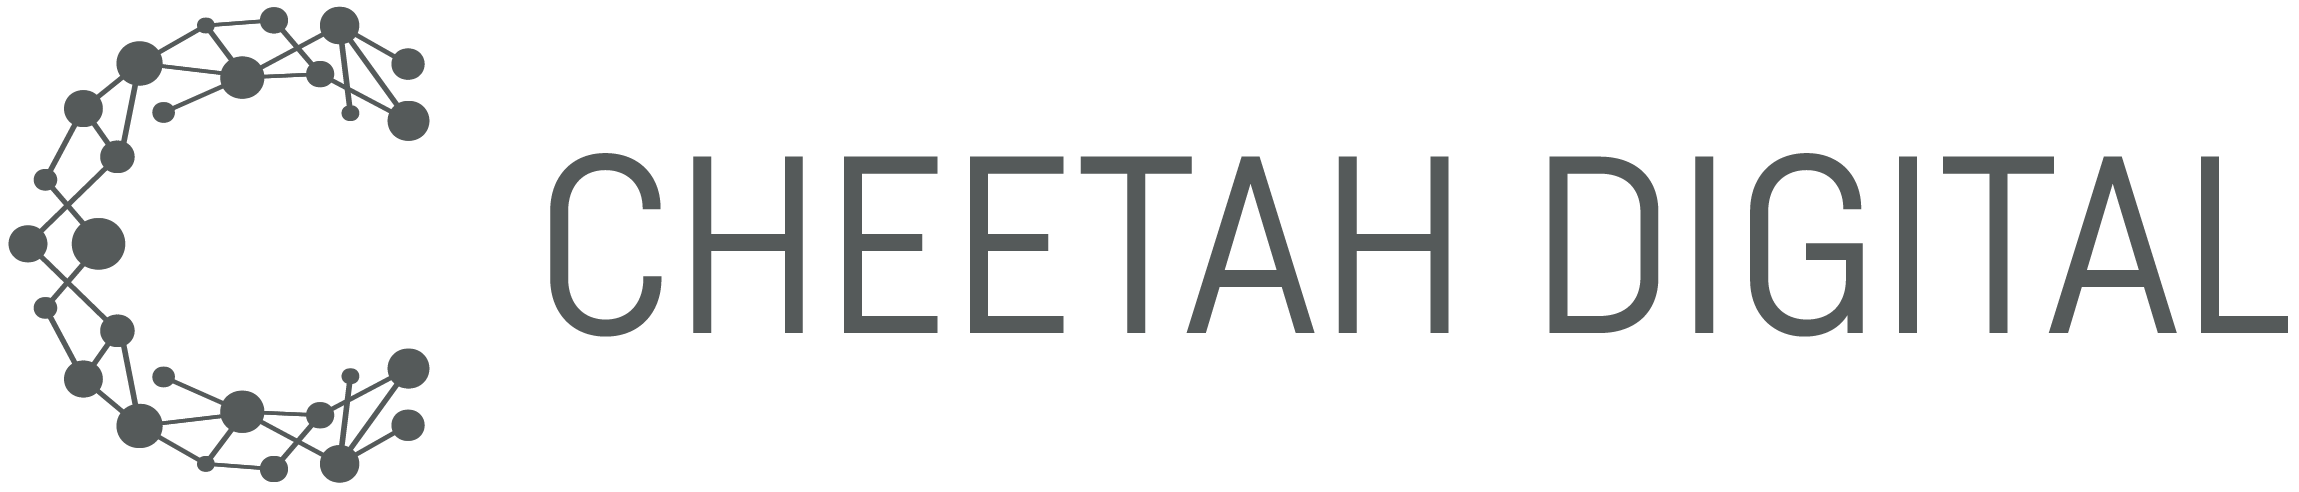 CheetahMail Logo - We are Dedicated to Marketers | Cheetah Digital